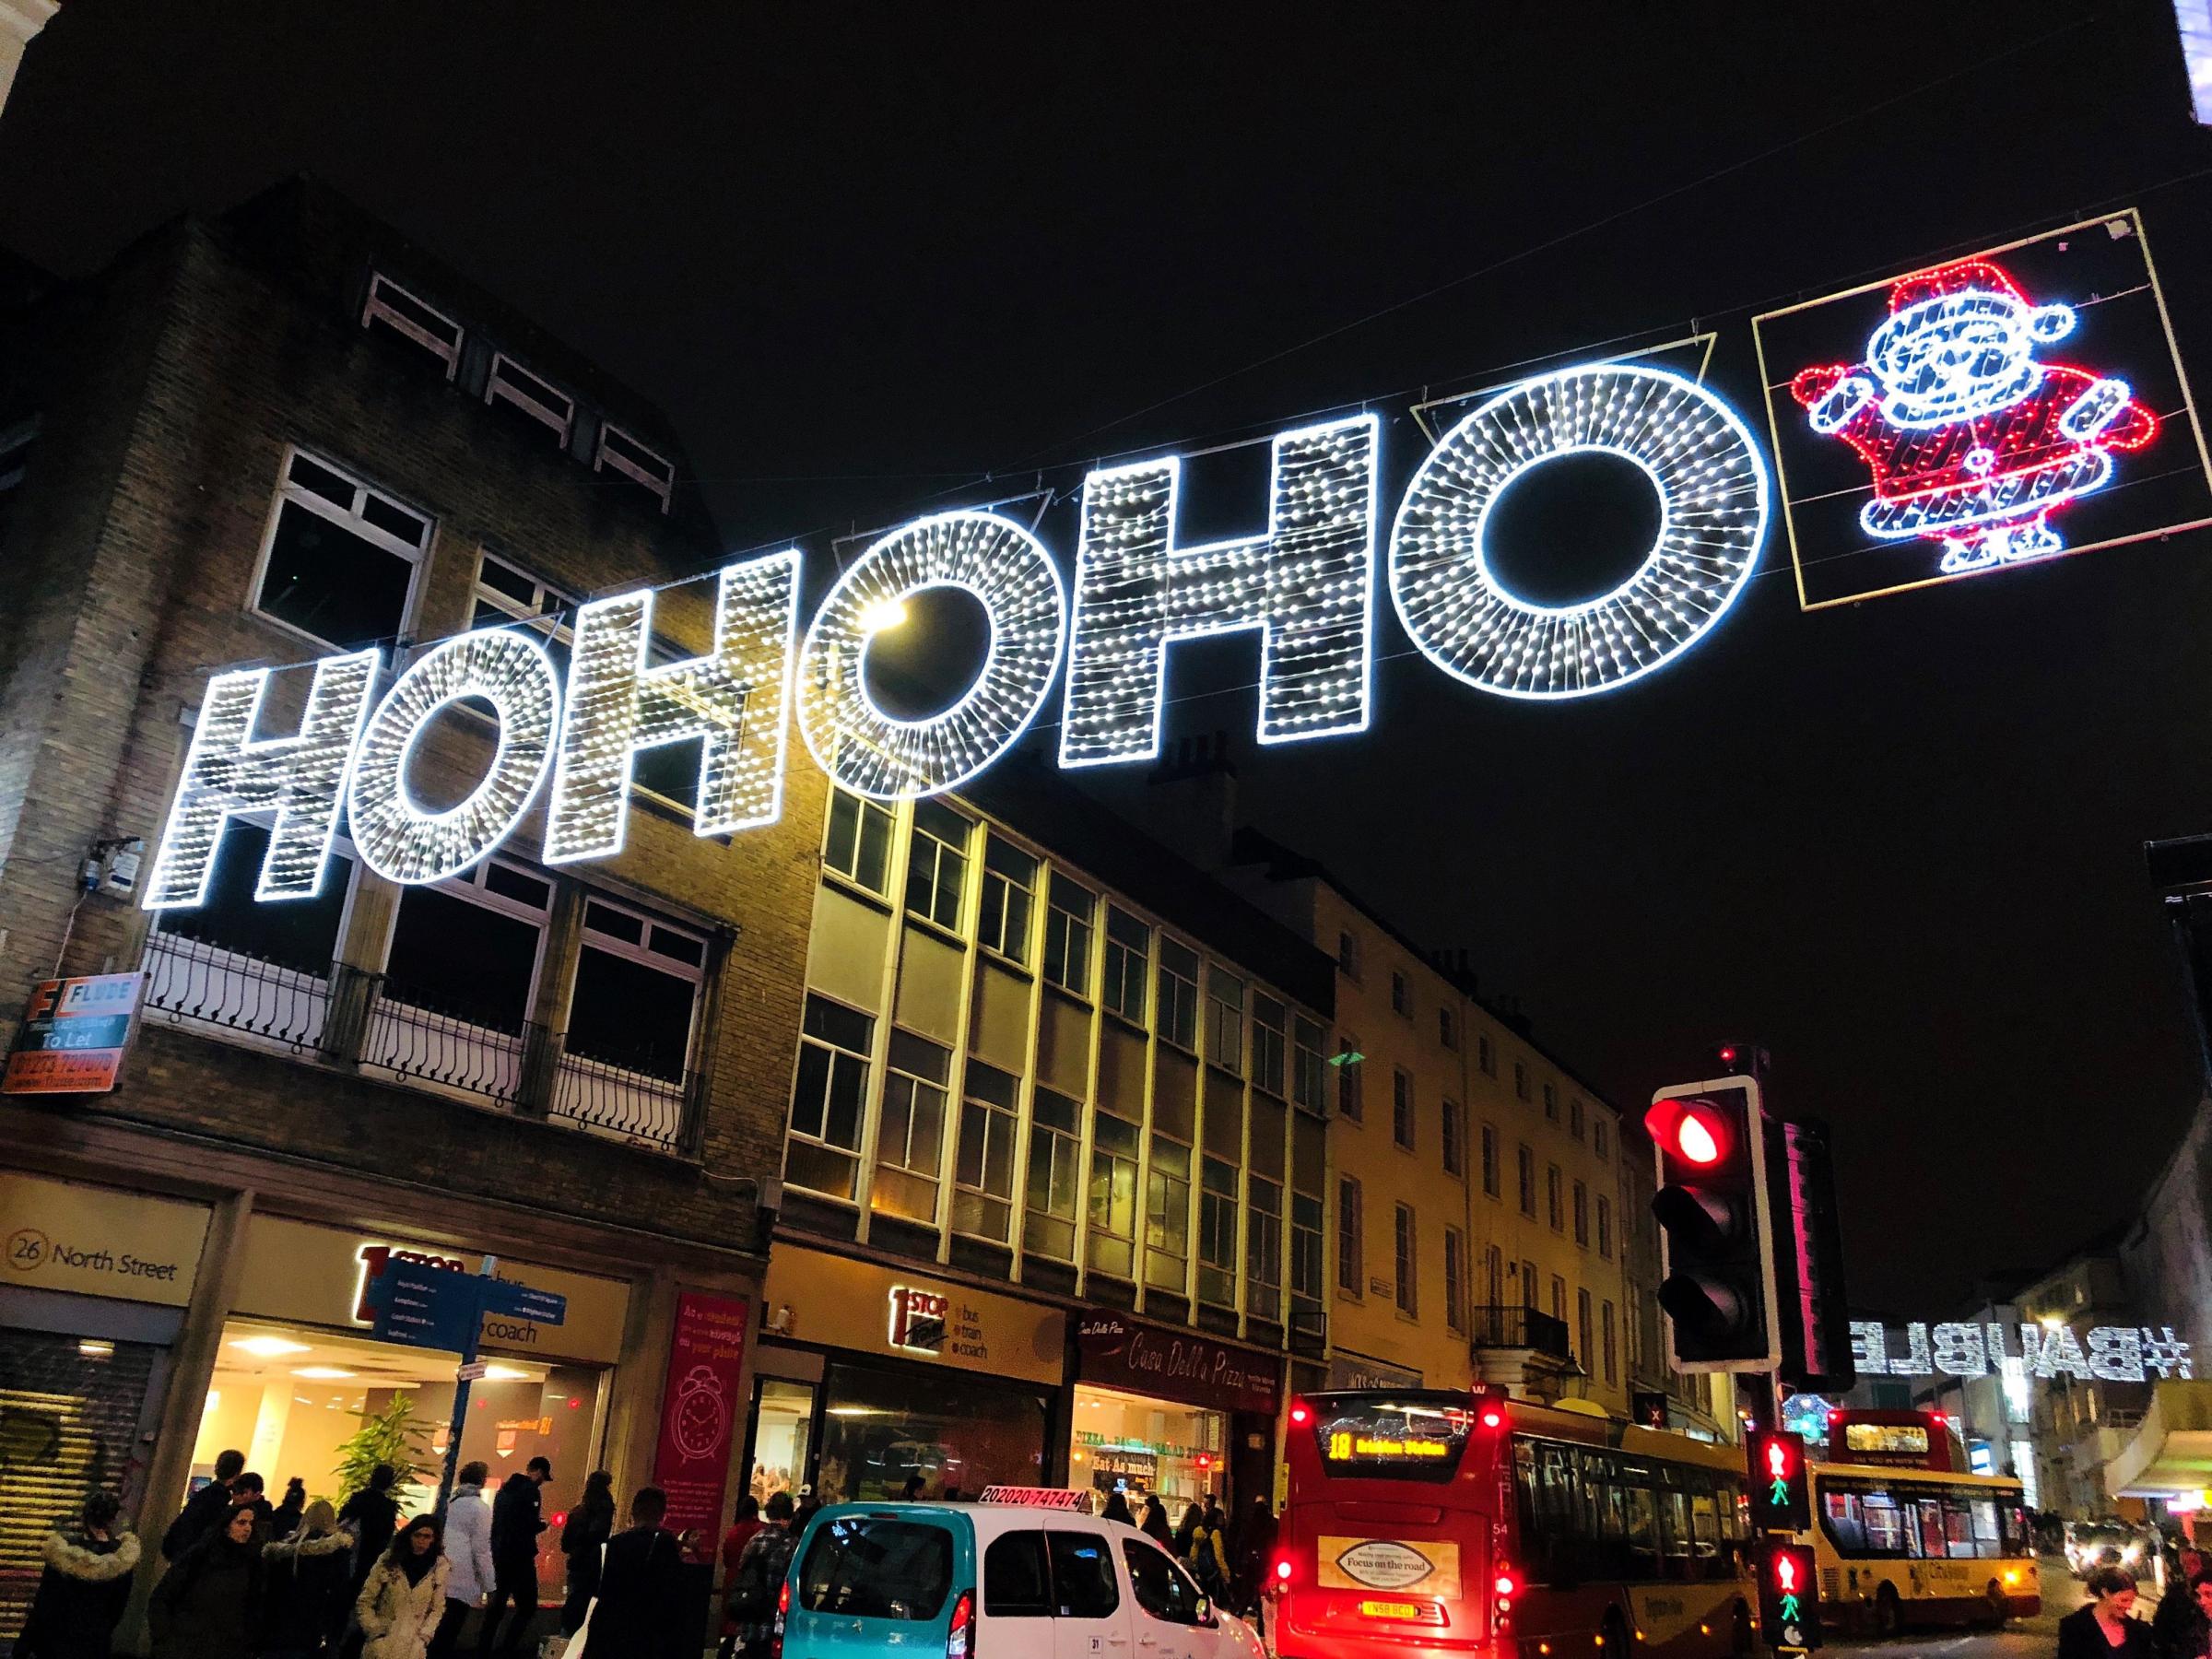 Christmas lights in North Street, Brighton..